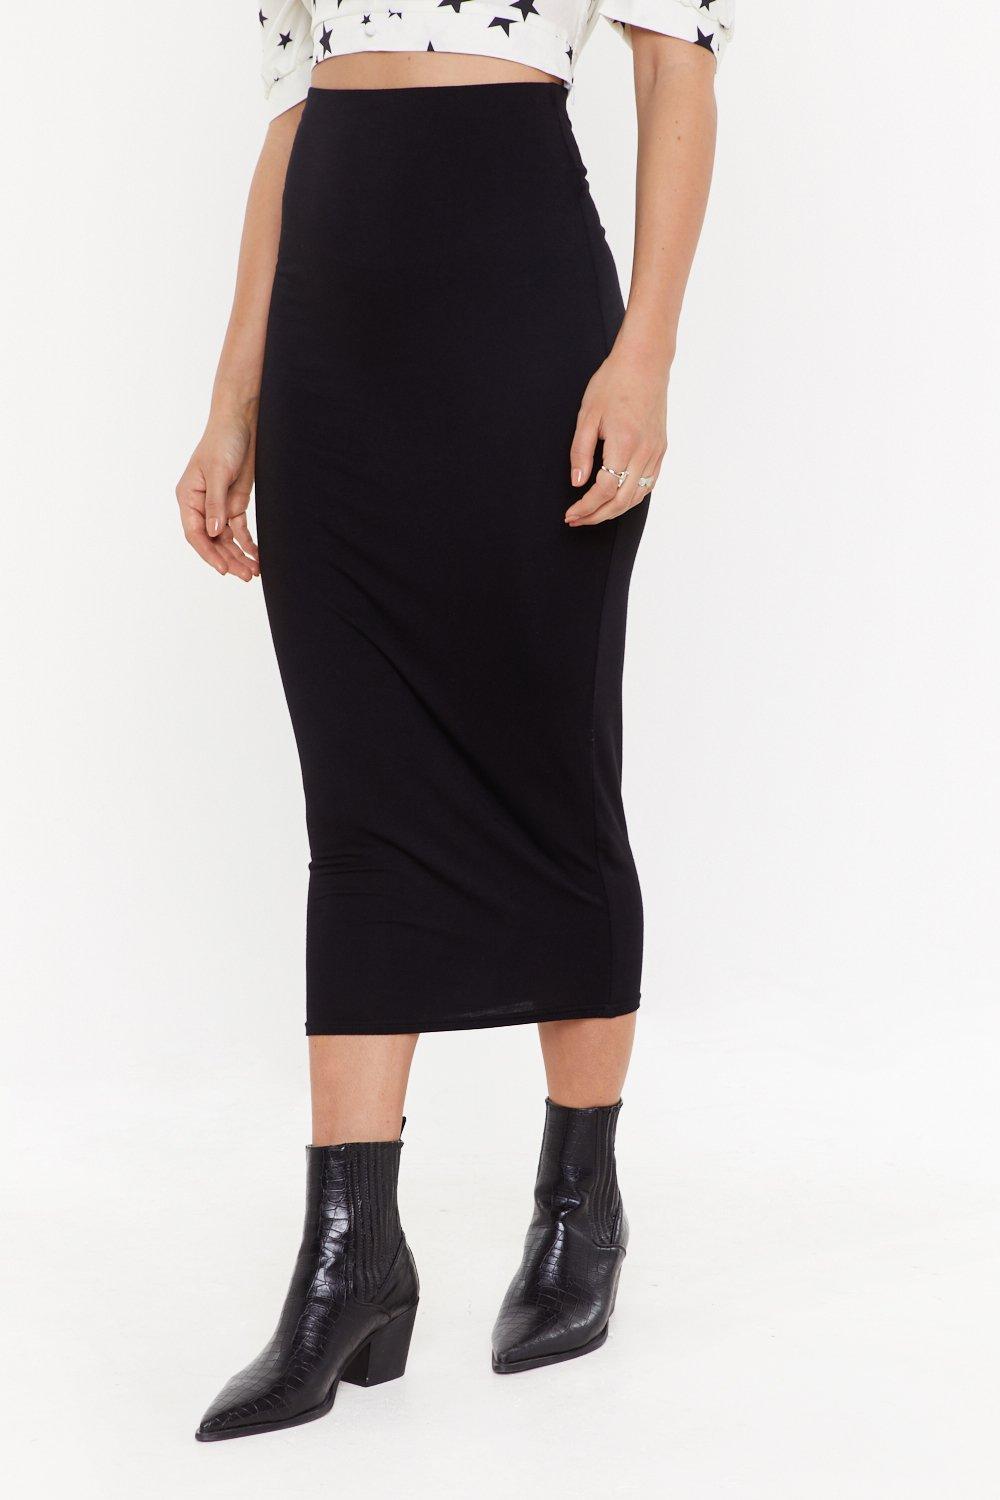 tight black midi skirt